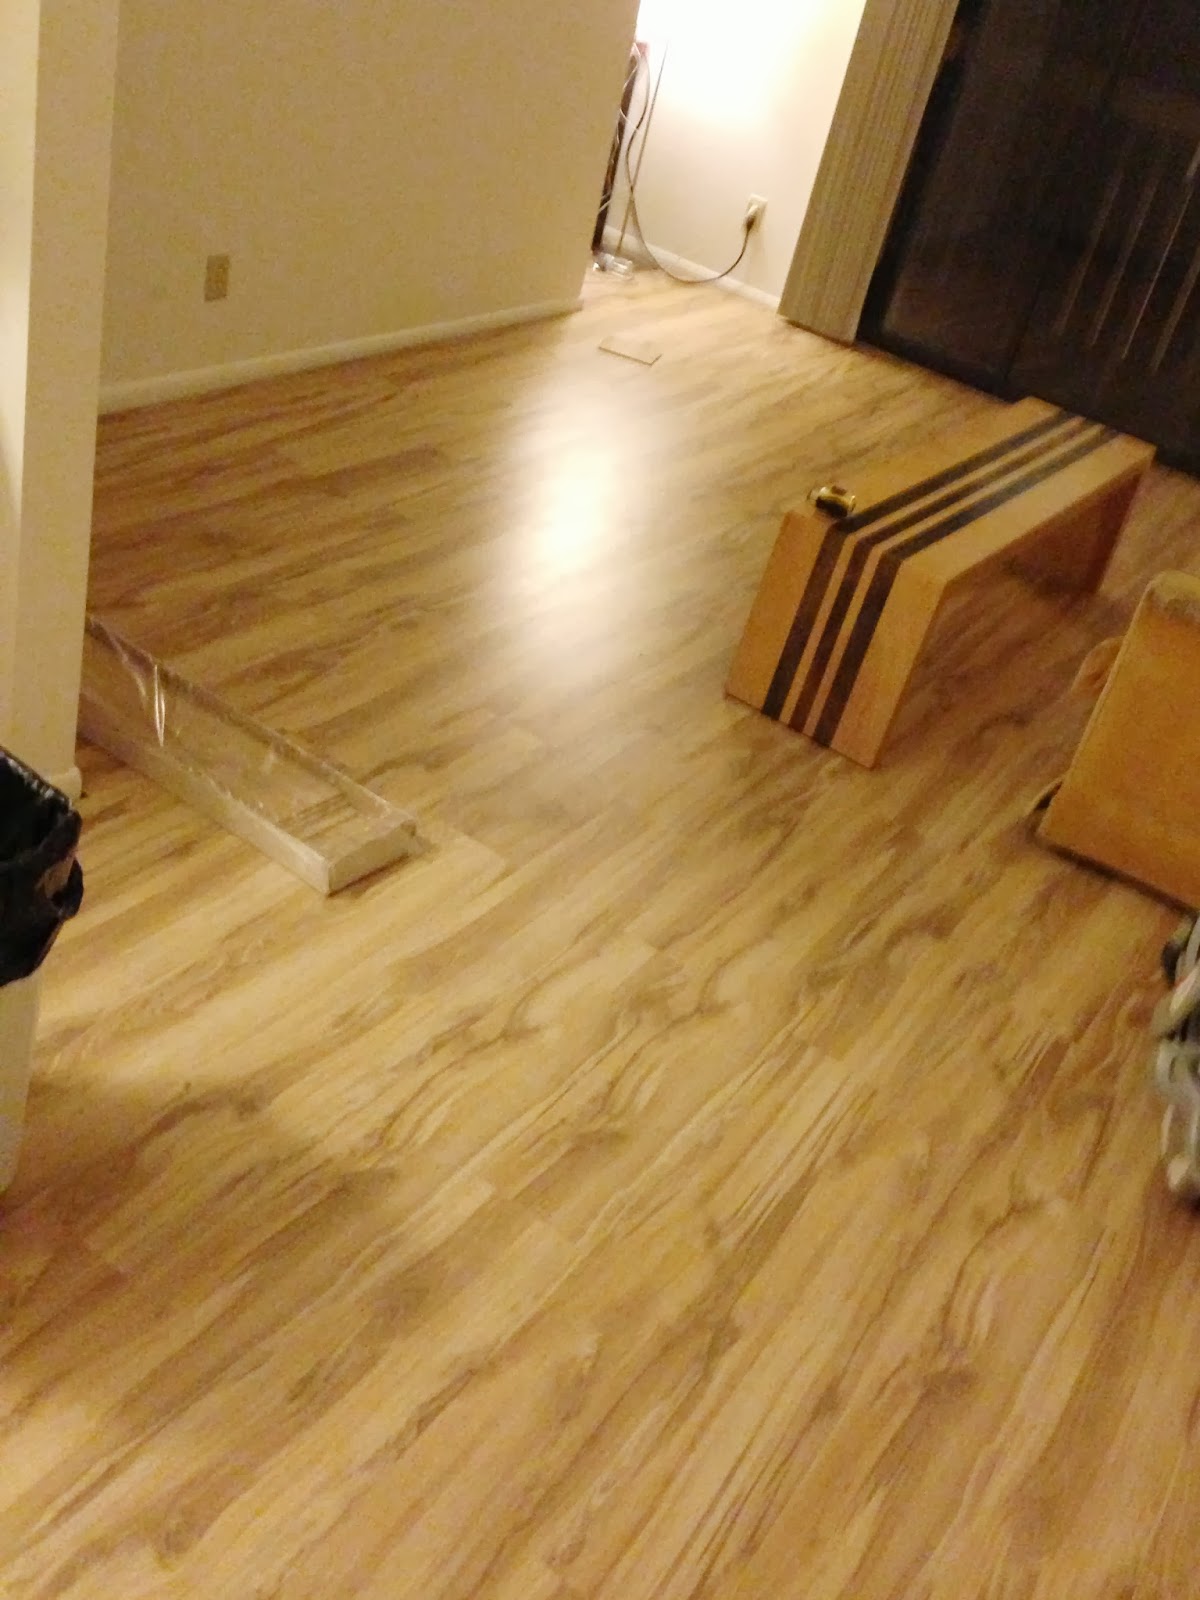 How We Put Hardwood Over Carpet Messymom, Can We Put Laminate Flooring Over Carpet